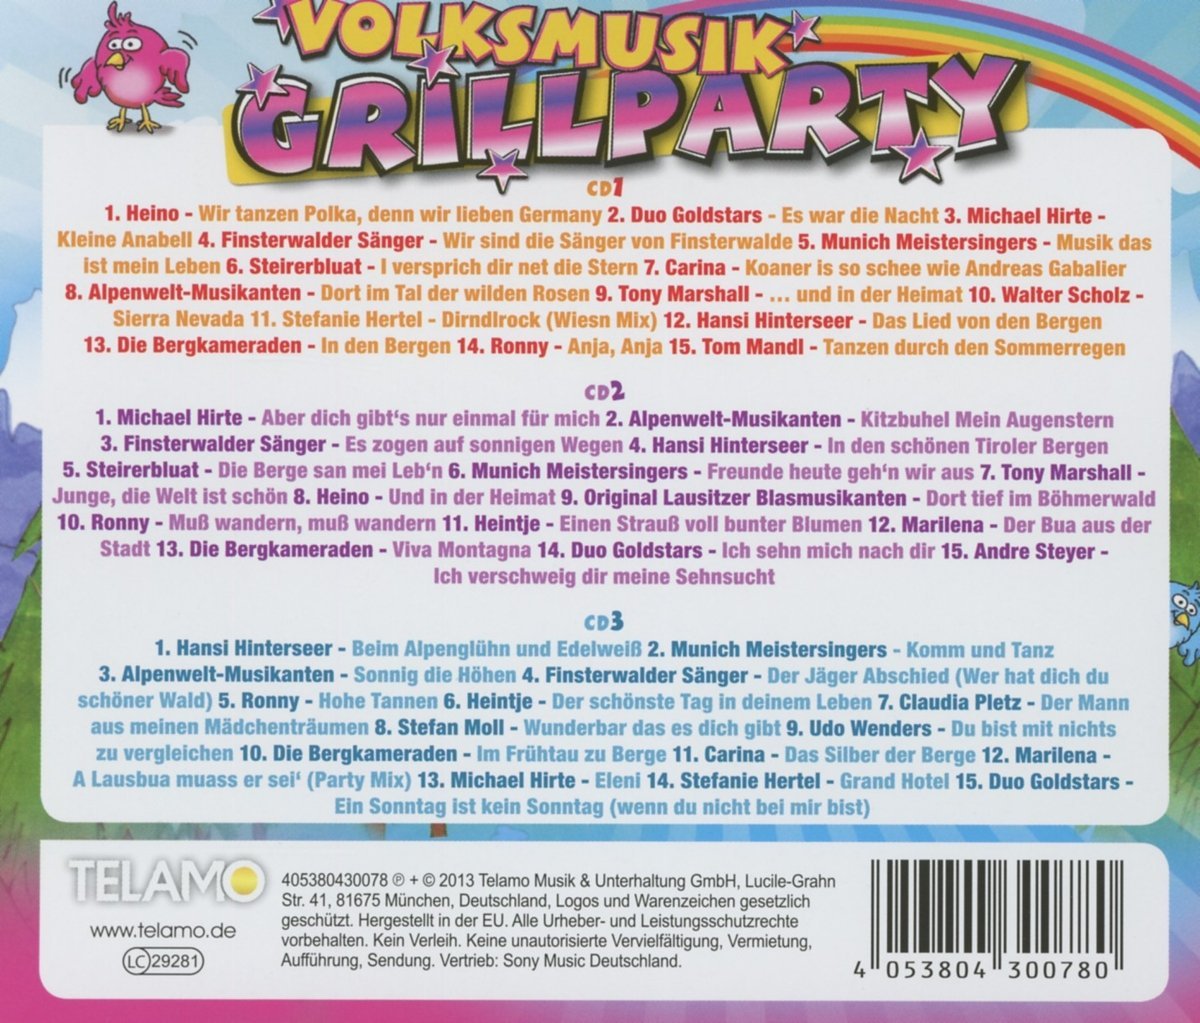 Volksmusik Grillparty - CD2 - 81IDwgemPzL._SL1200_.jpg